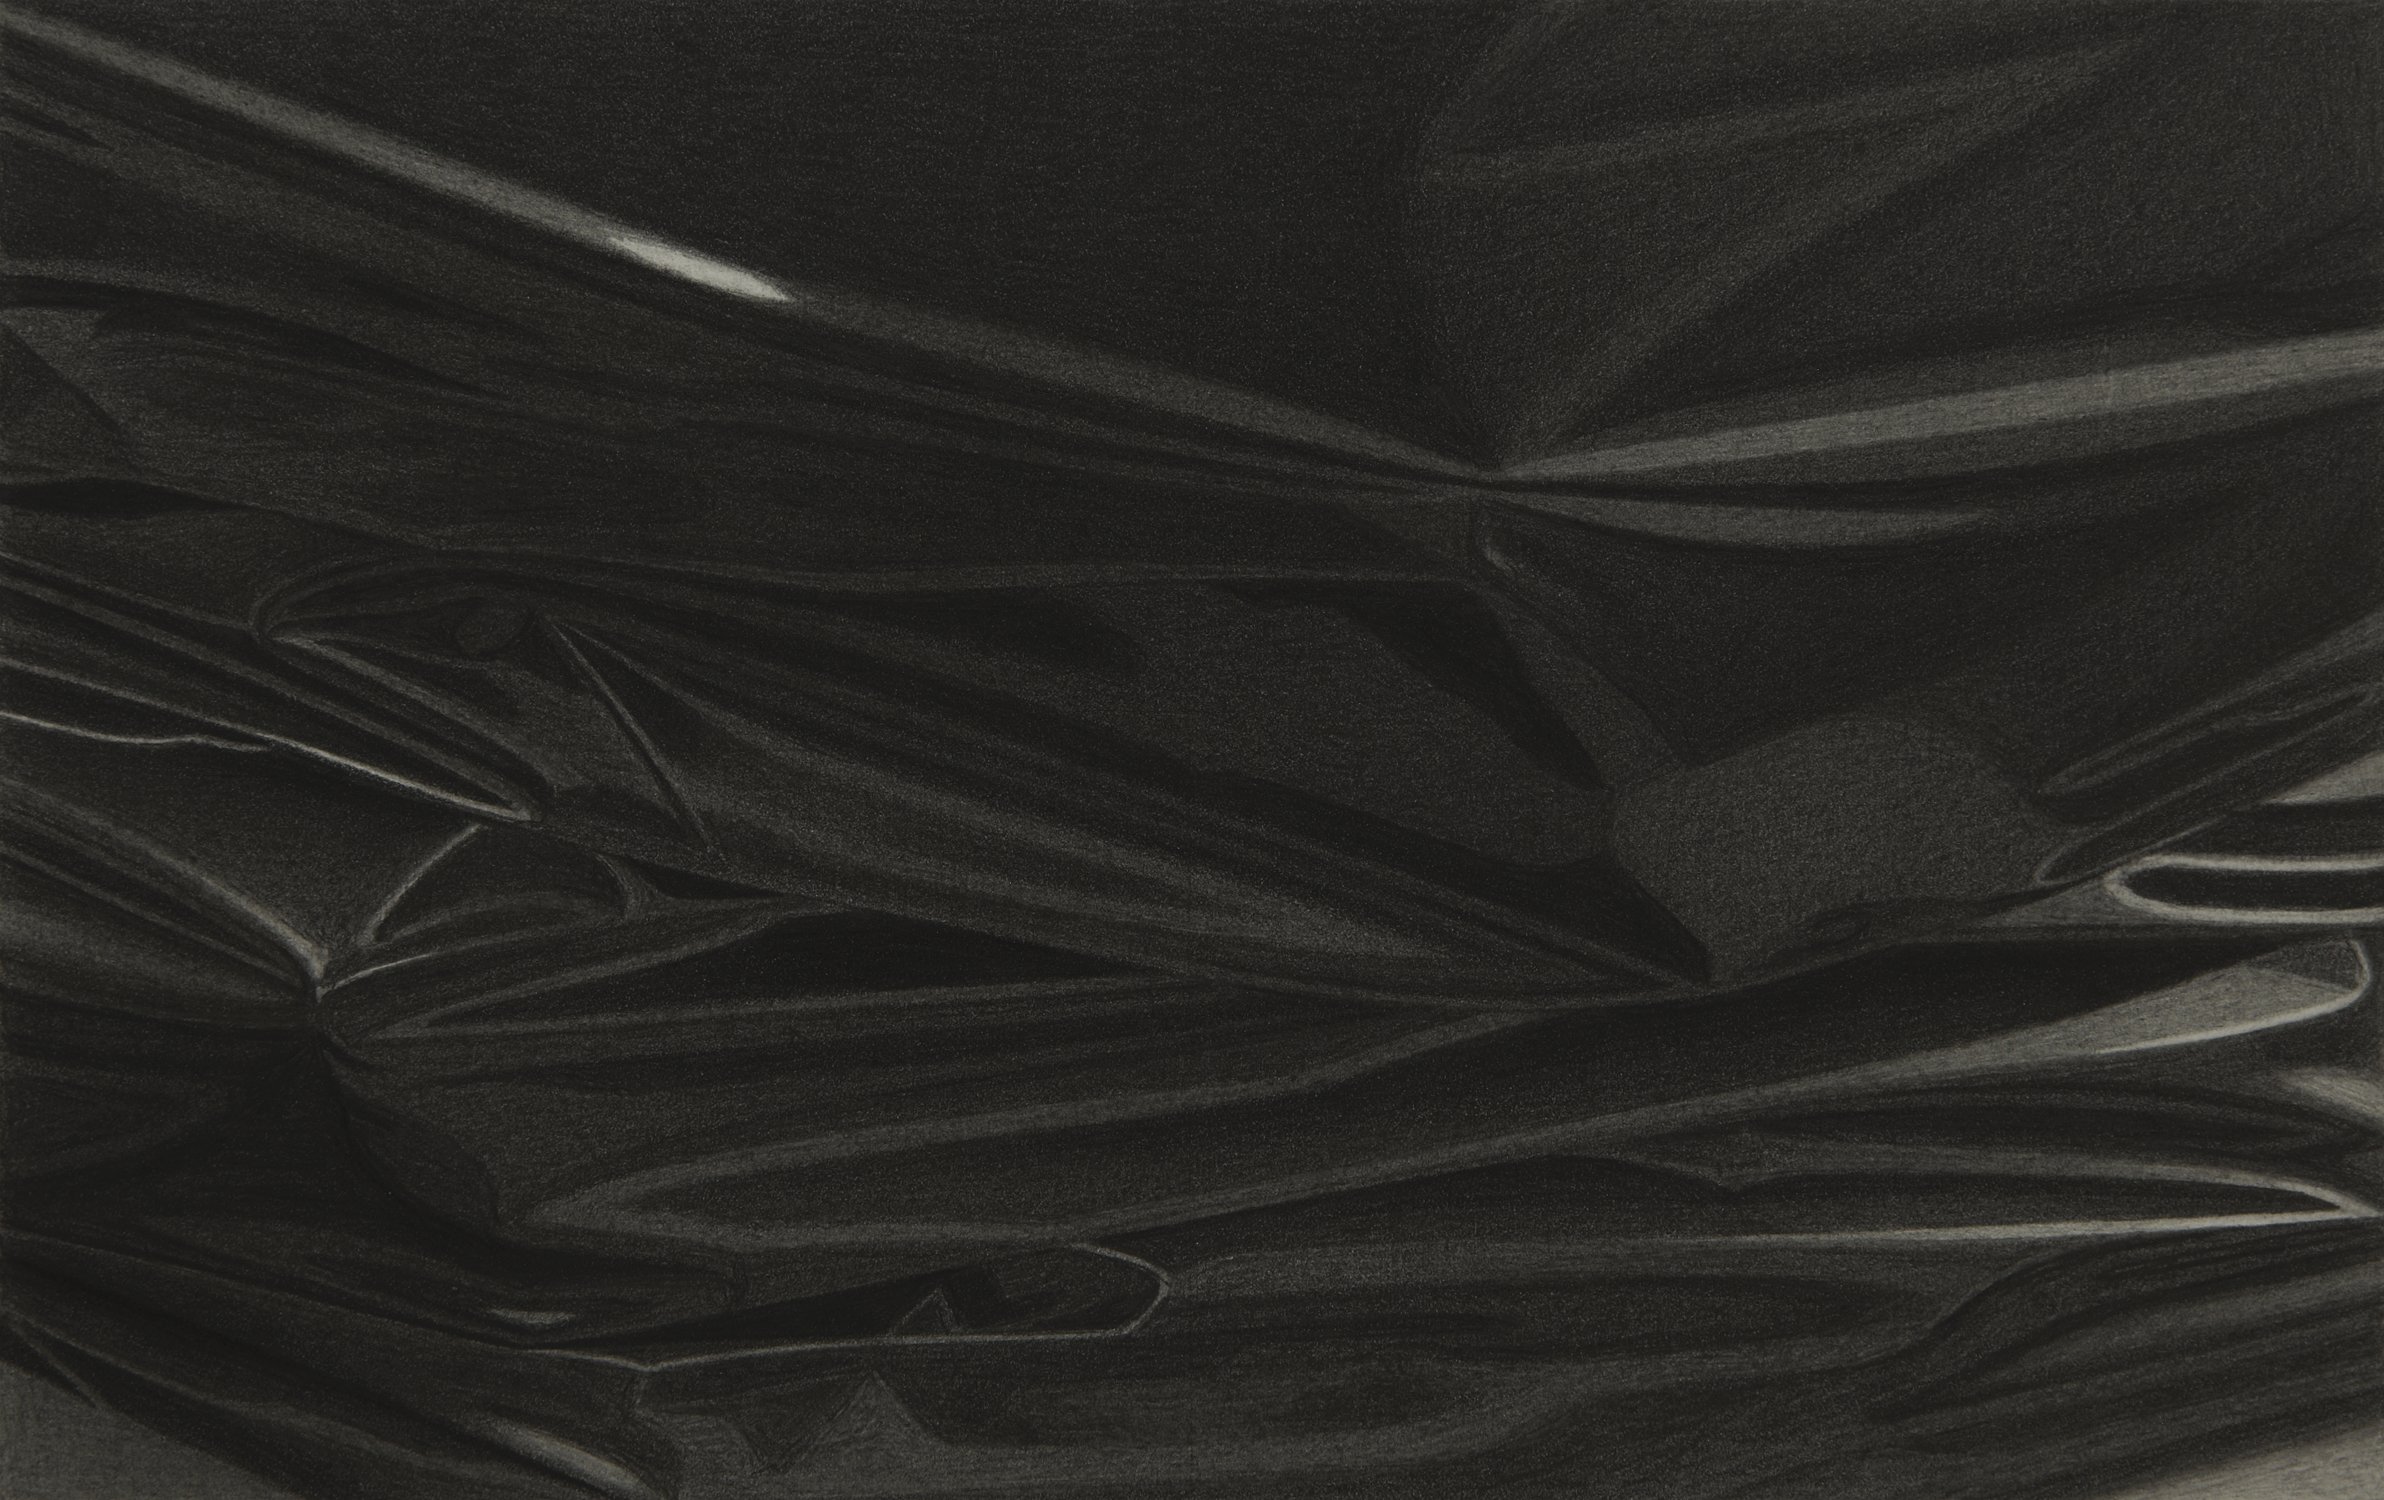  Plastic 3  8x12”, graphite on paper, 2012   